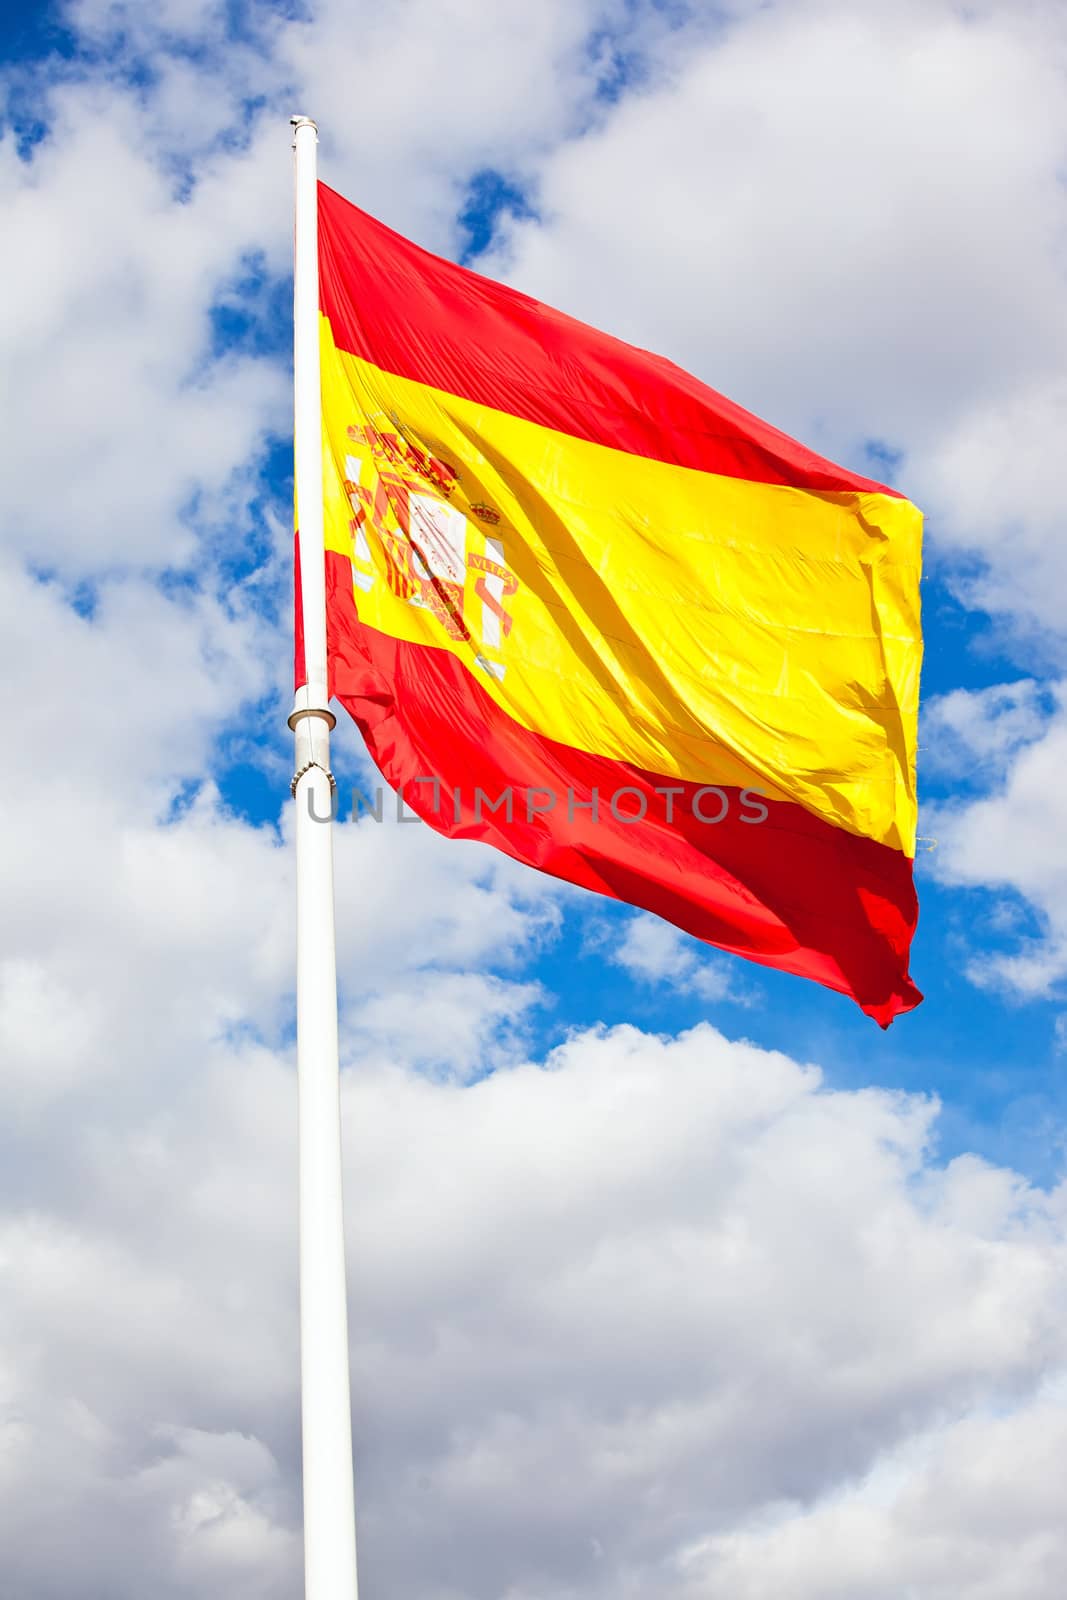 Spanish flag by sailorr